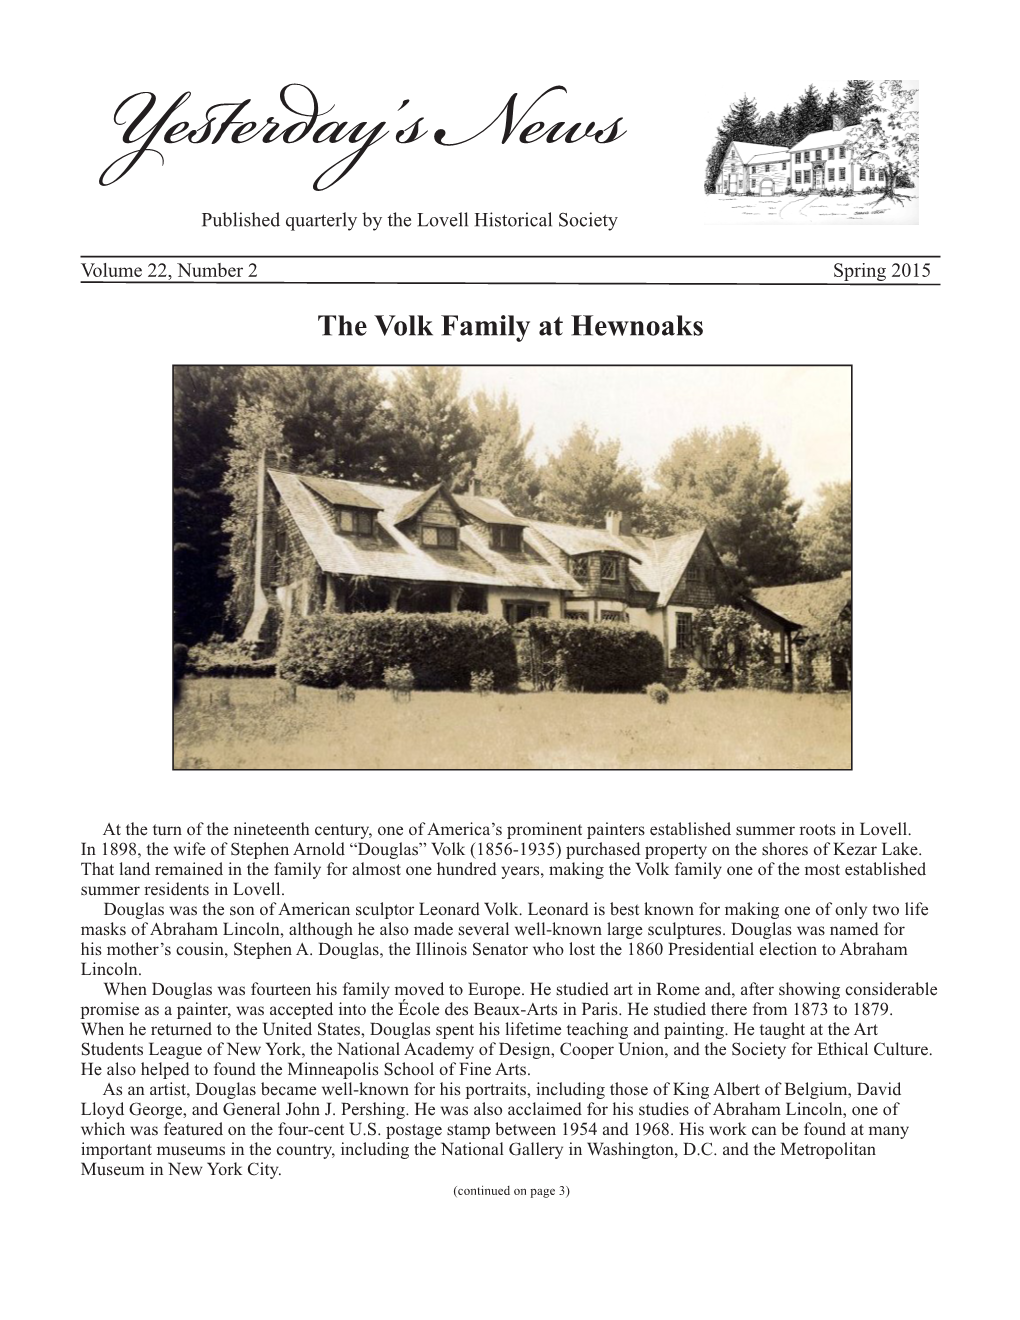 The Volk Family at Hewnoaks